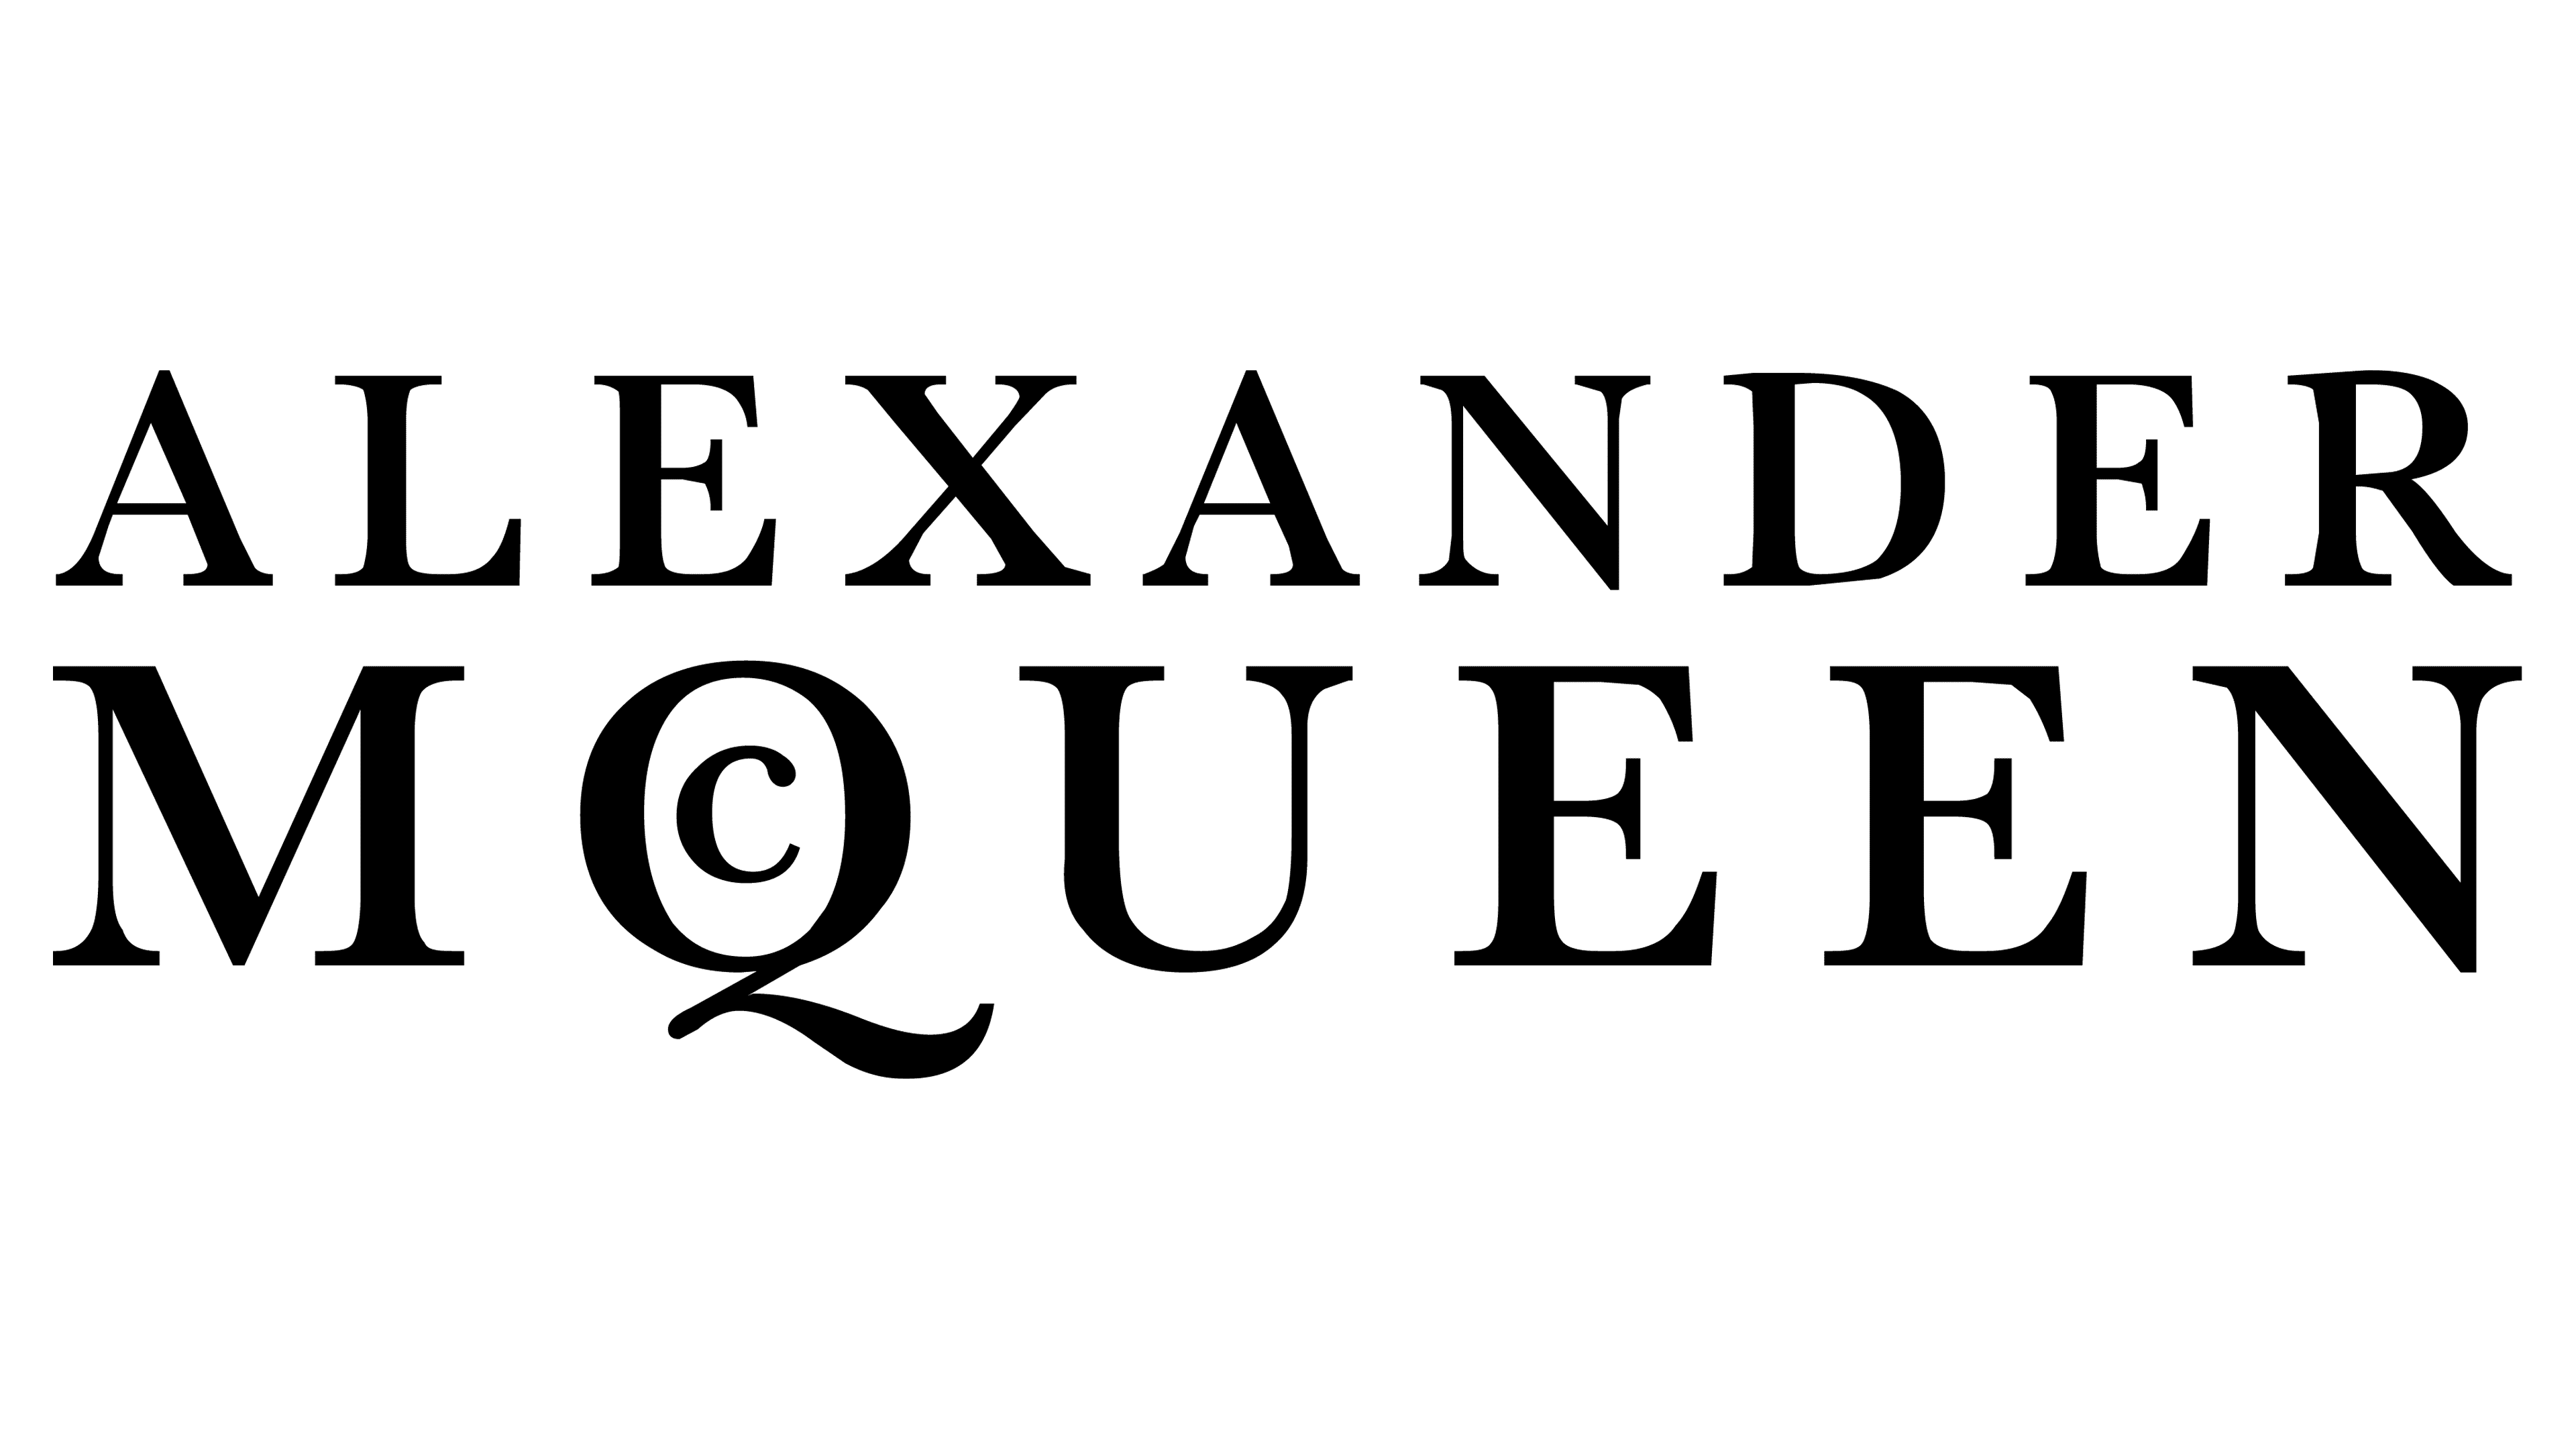 Alexander McQueen Logo